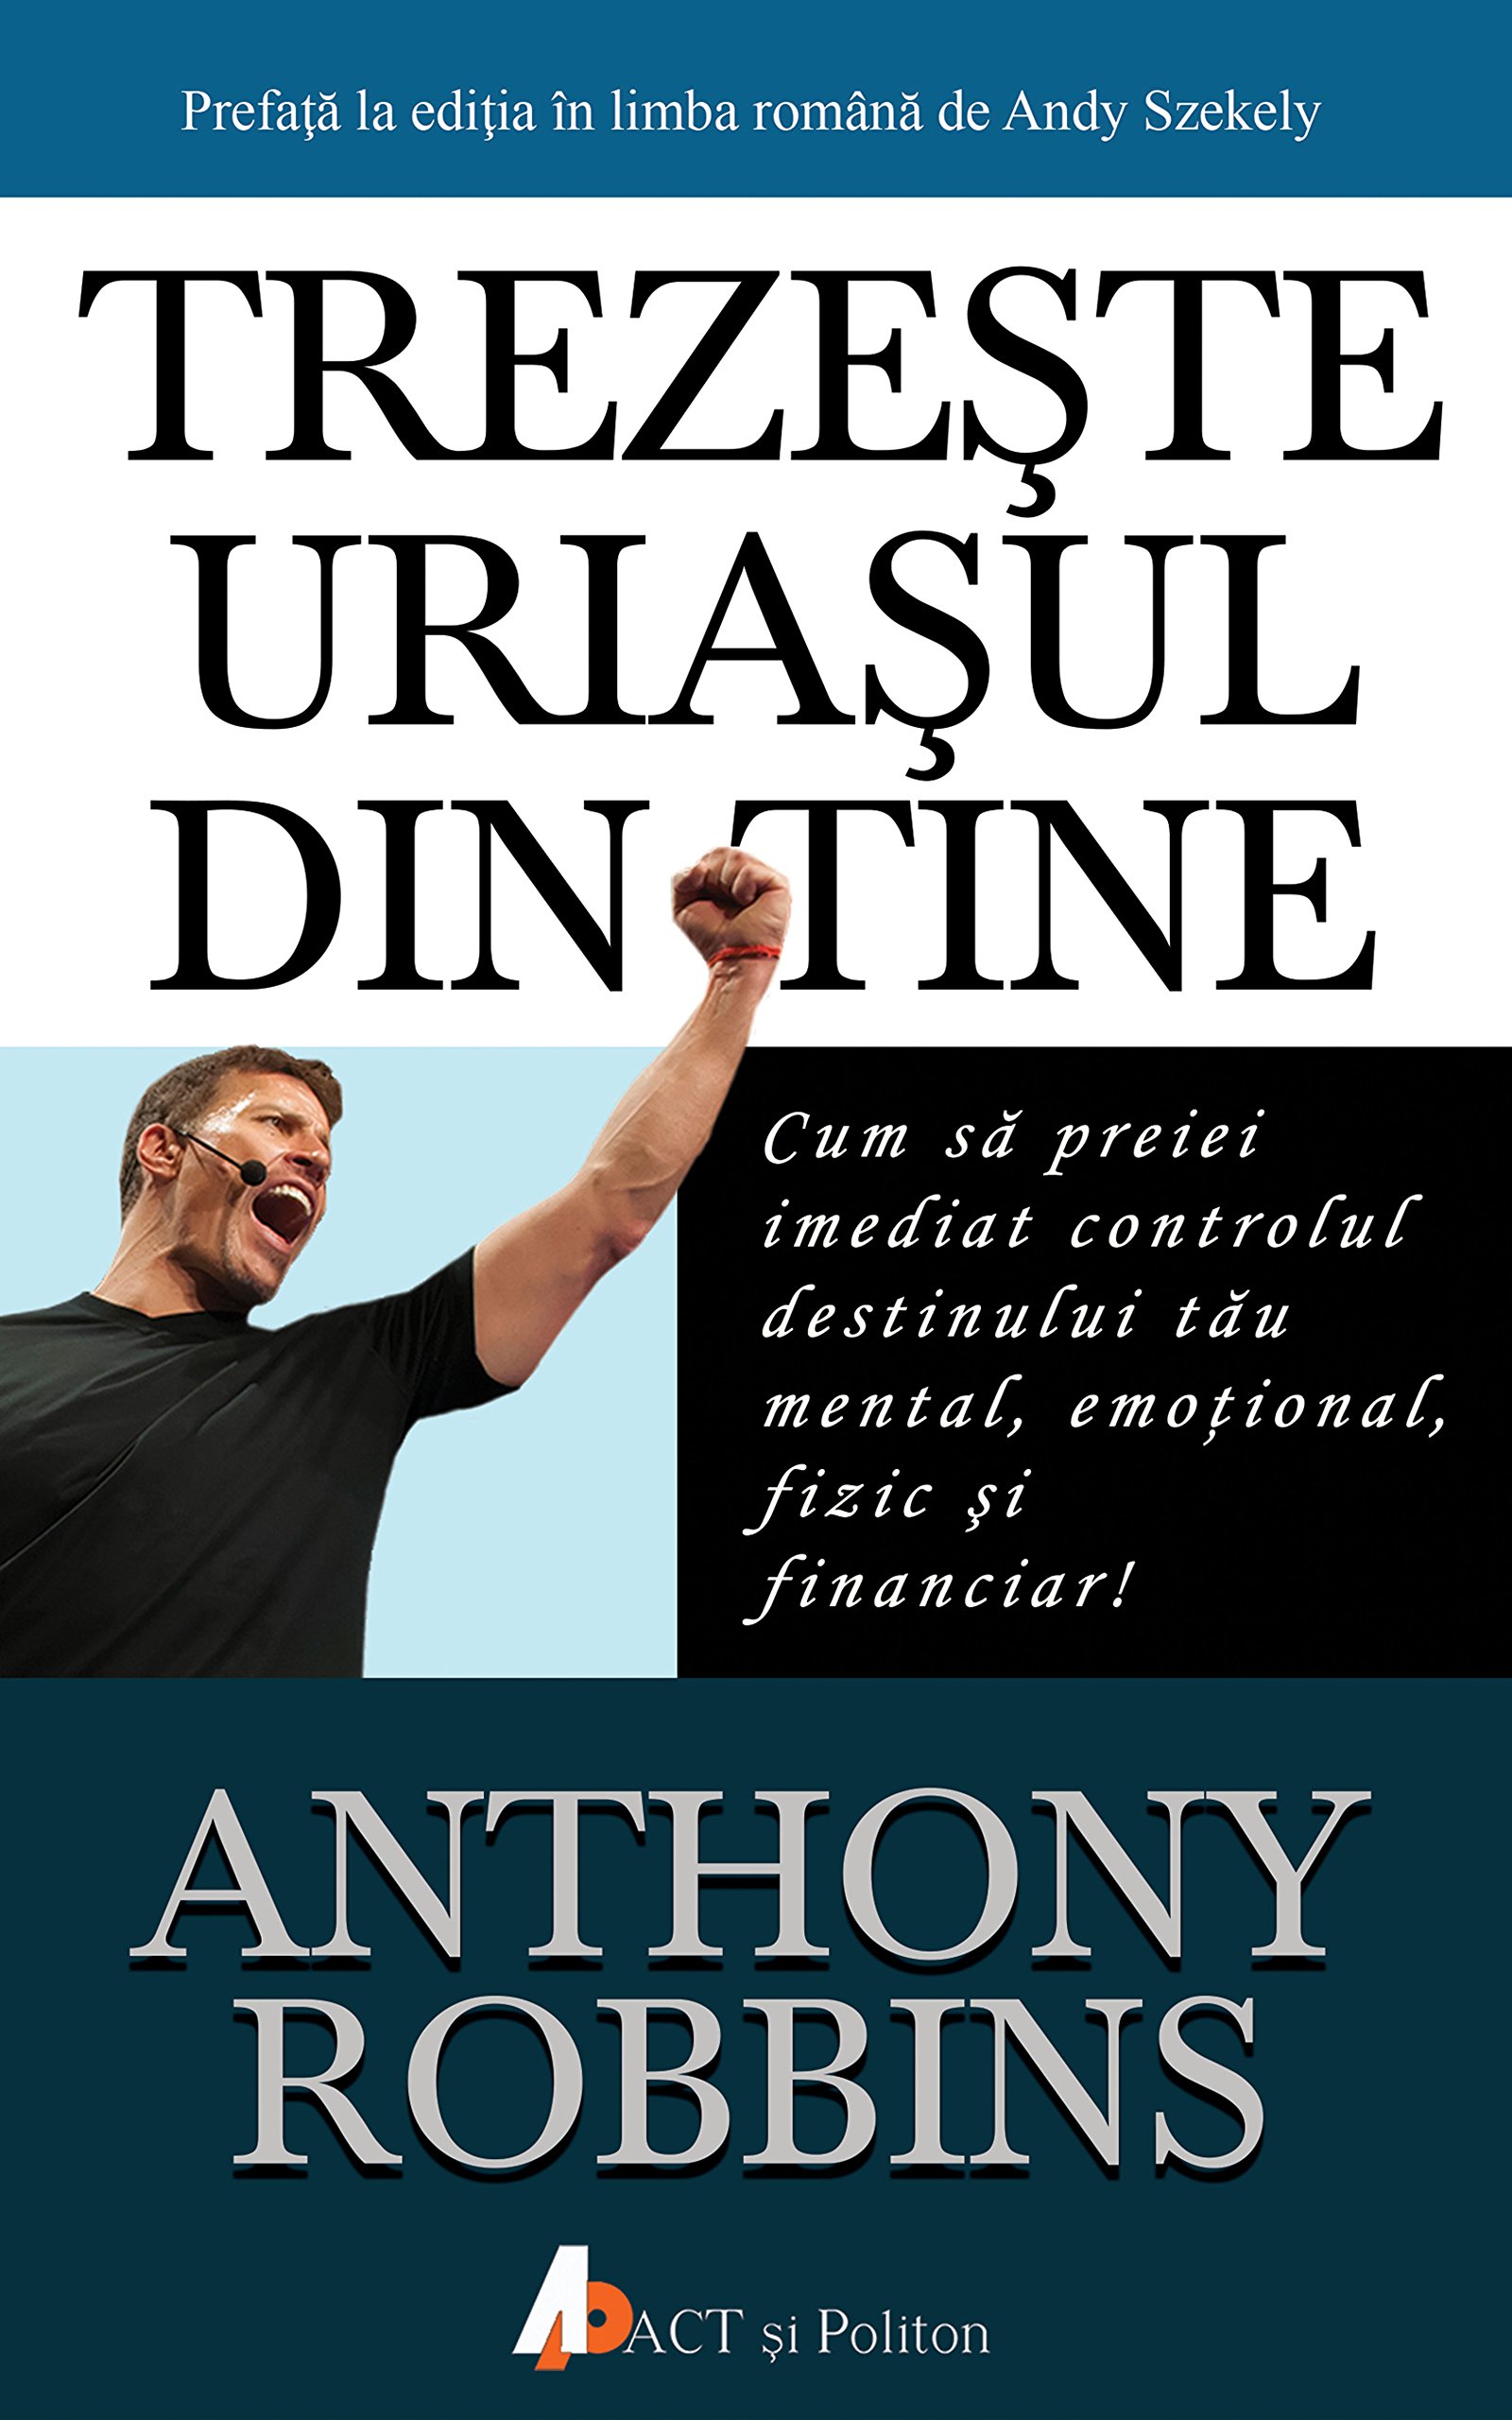 Trezeste uriasul din tine | Tony Robbins ACT si Politon poza bestsellers.ro